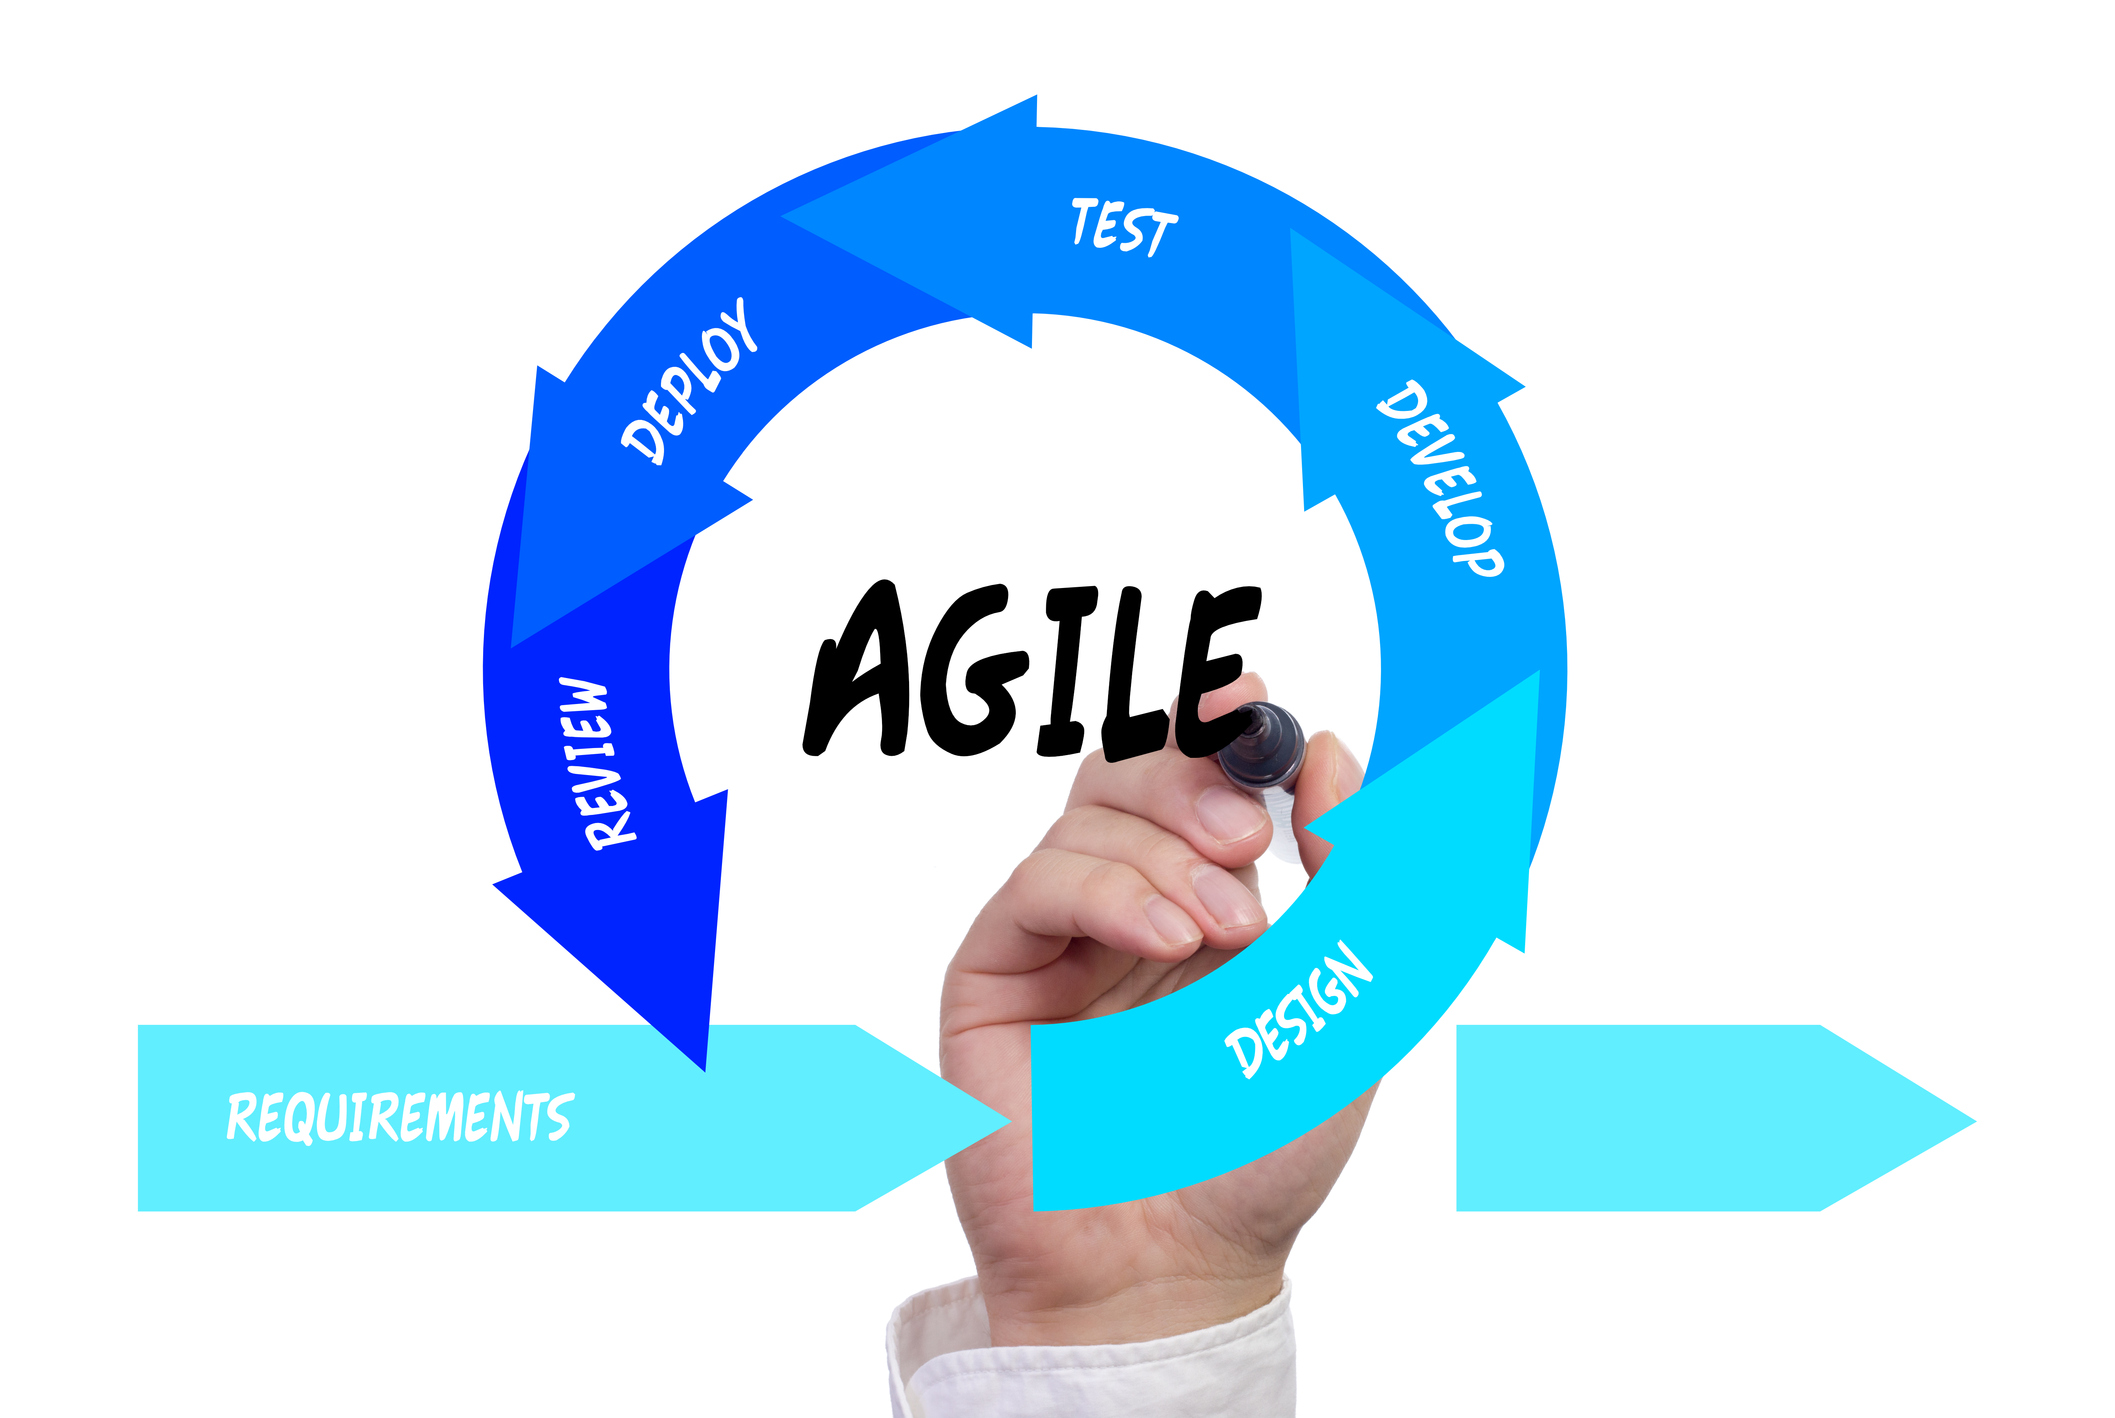 agile-software-development